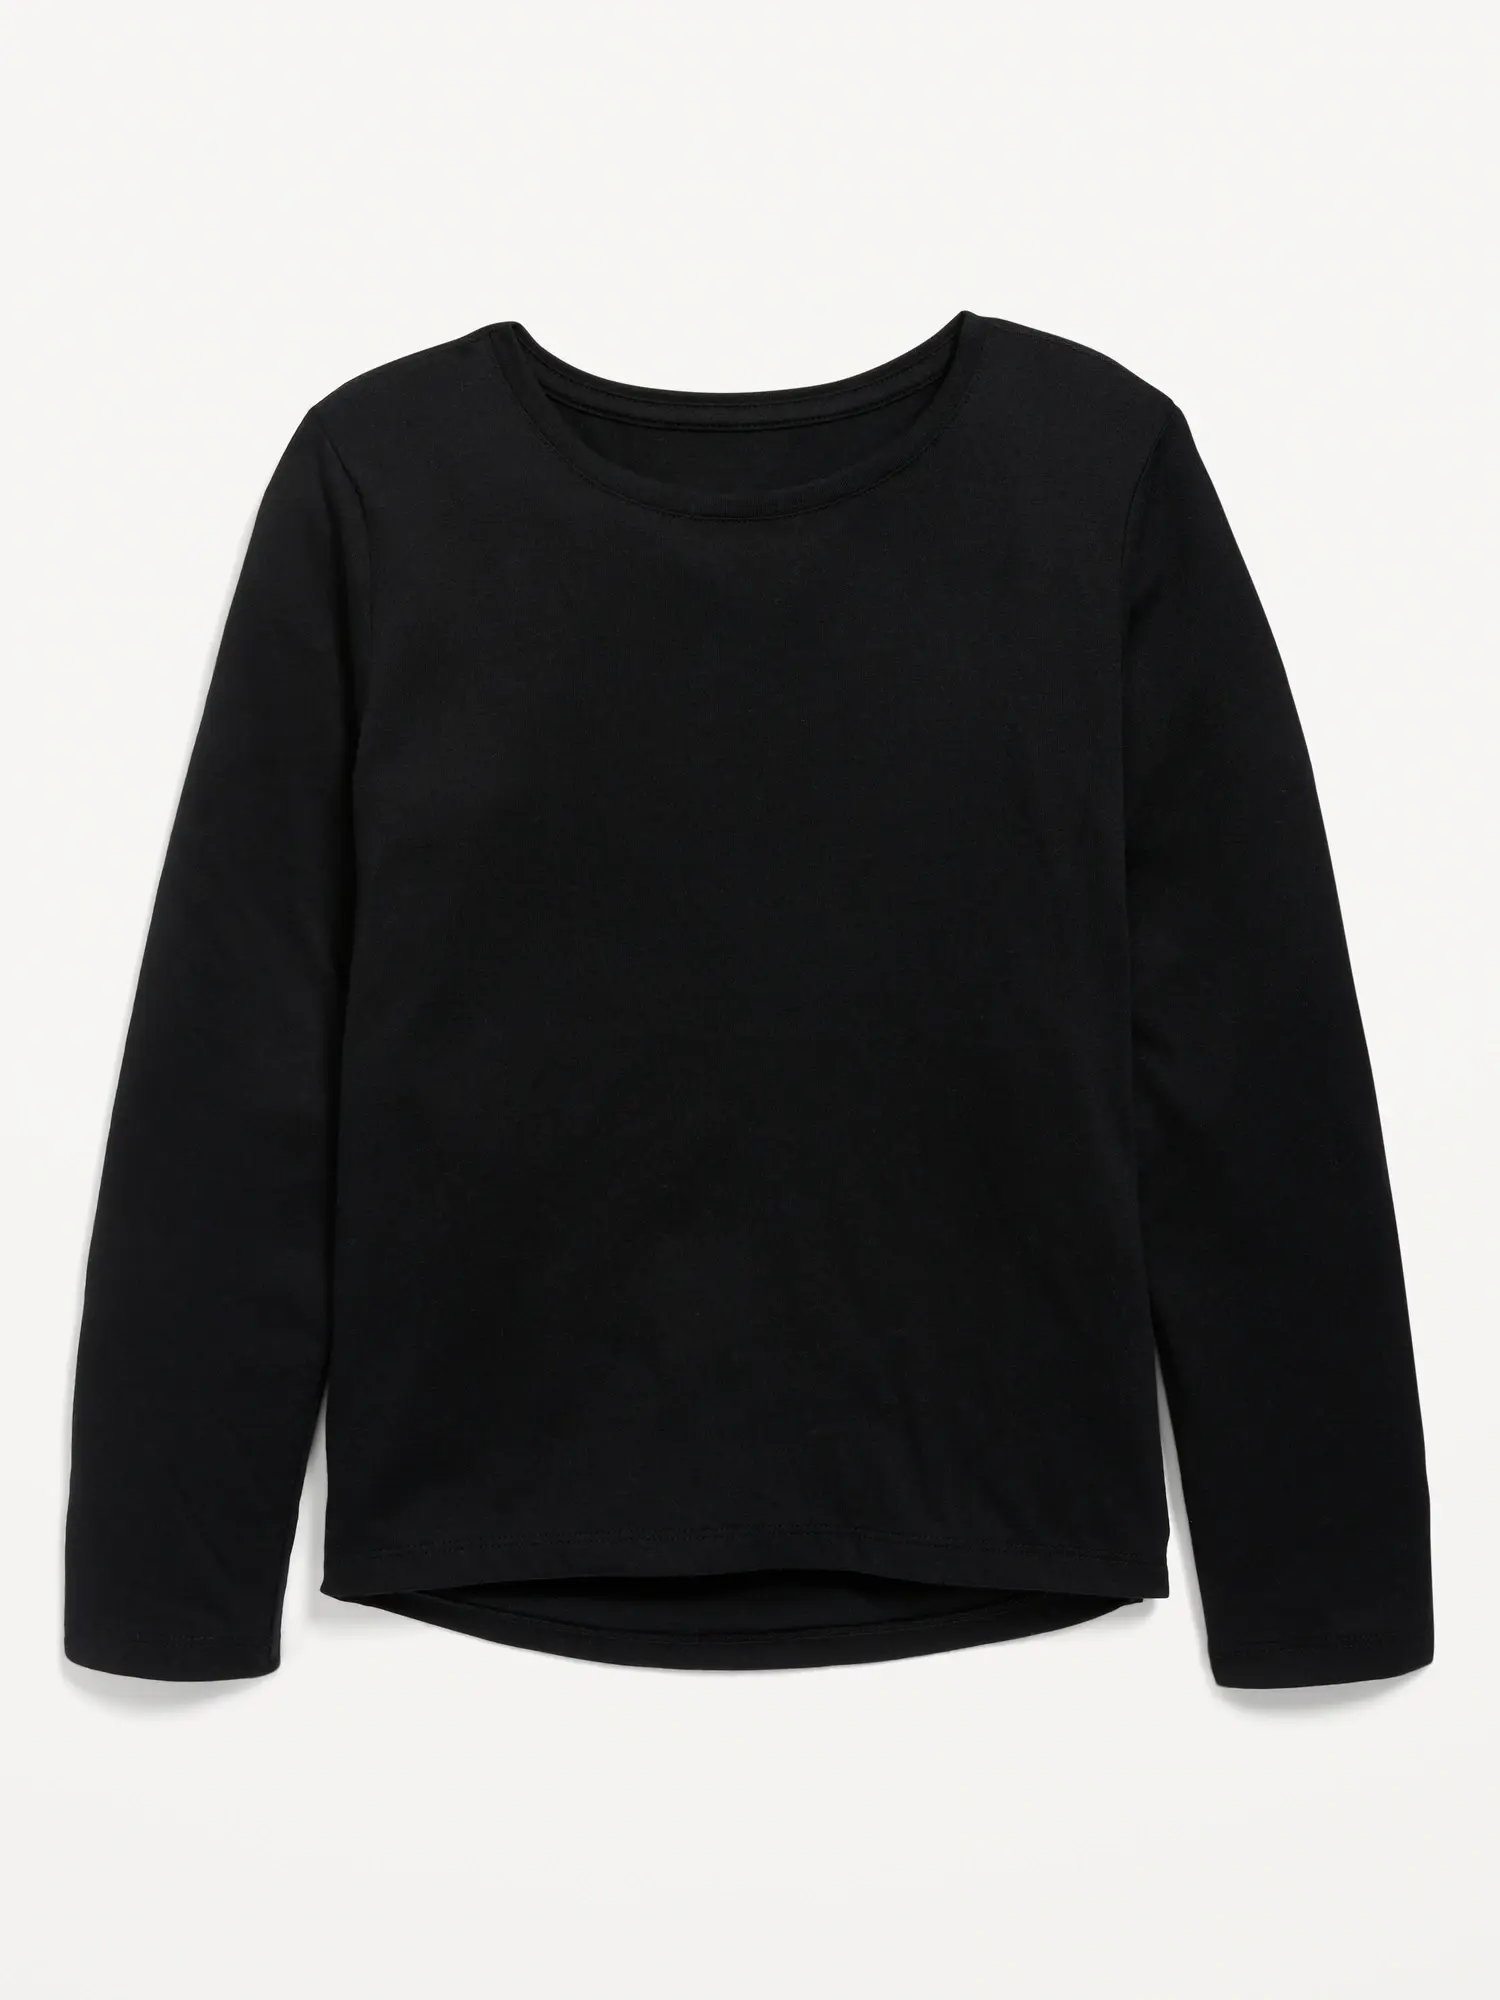 Old Navy Softest Long-Sleeve T-Shirt for Girls black. 1